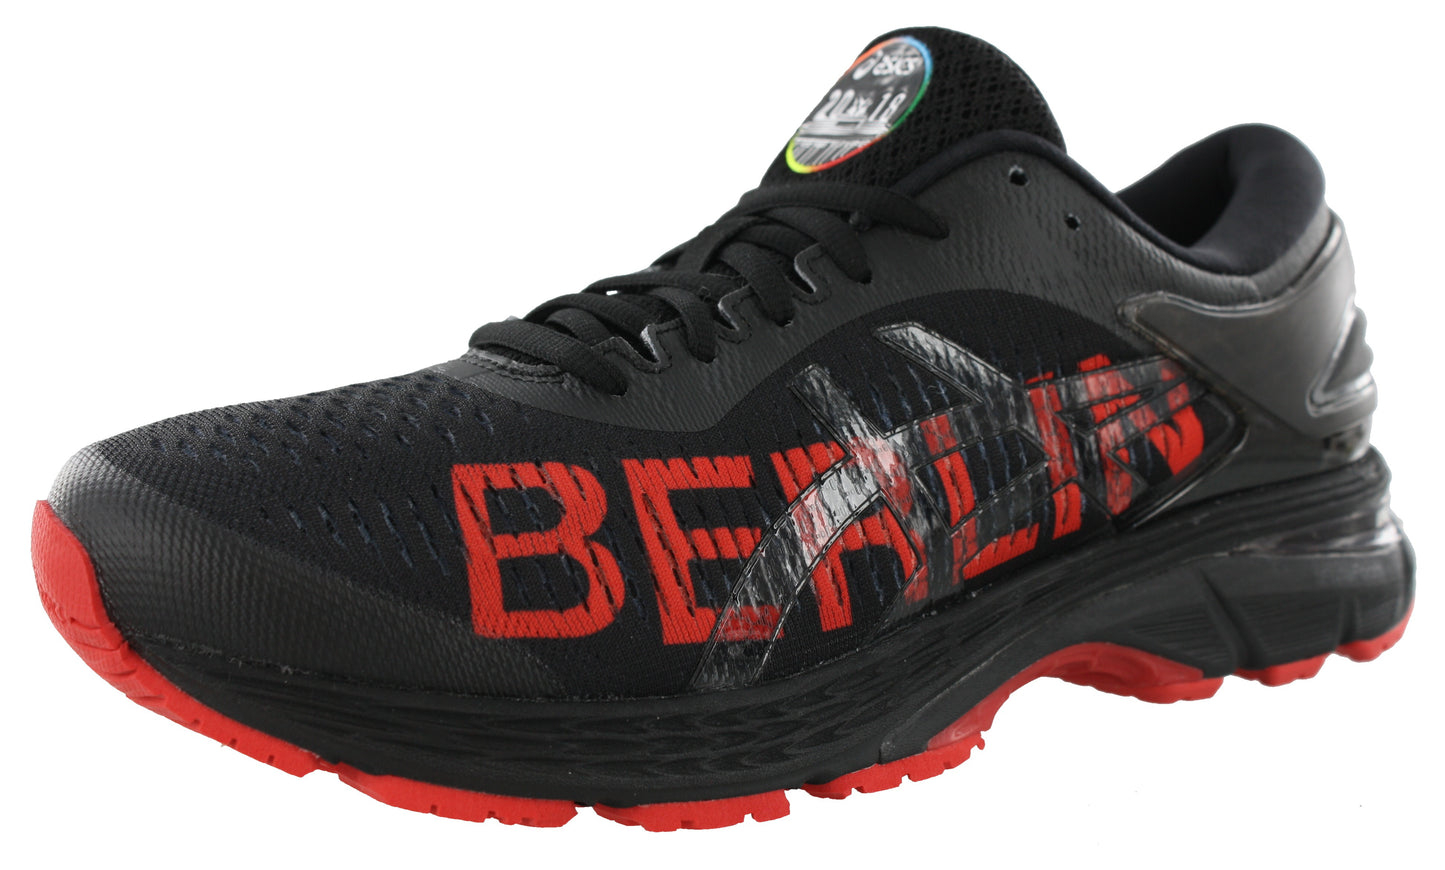 Lateral of Black / Red ASICS Women Gel kayano 25 Flat Feet Running Shoes Berlin